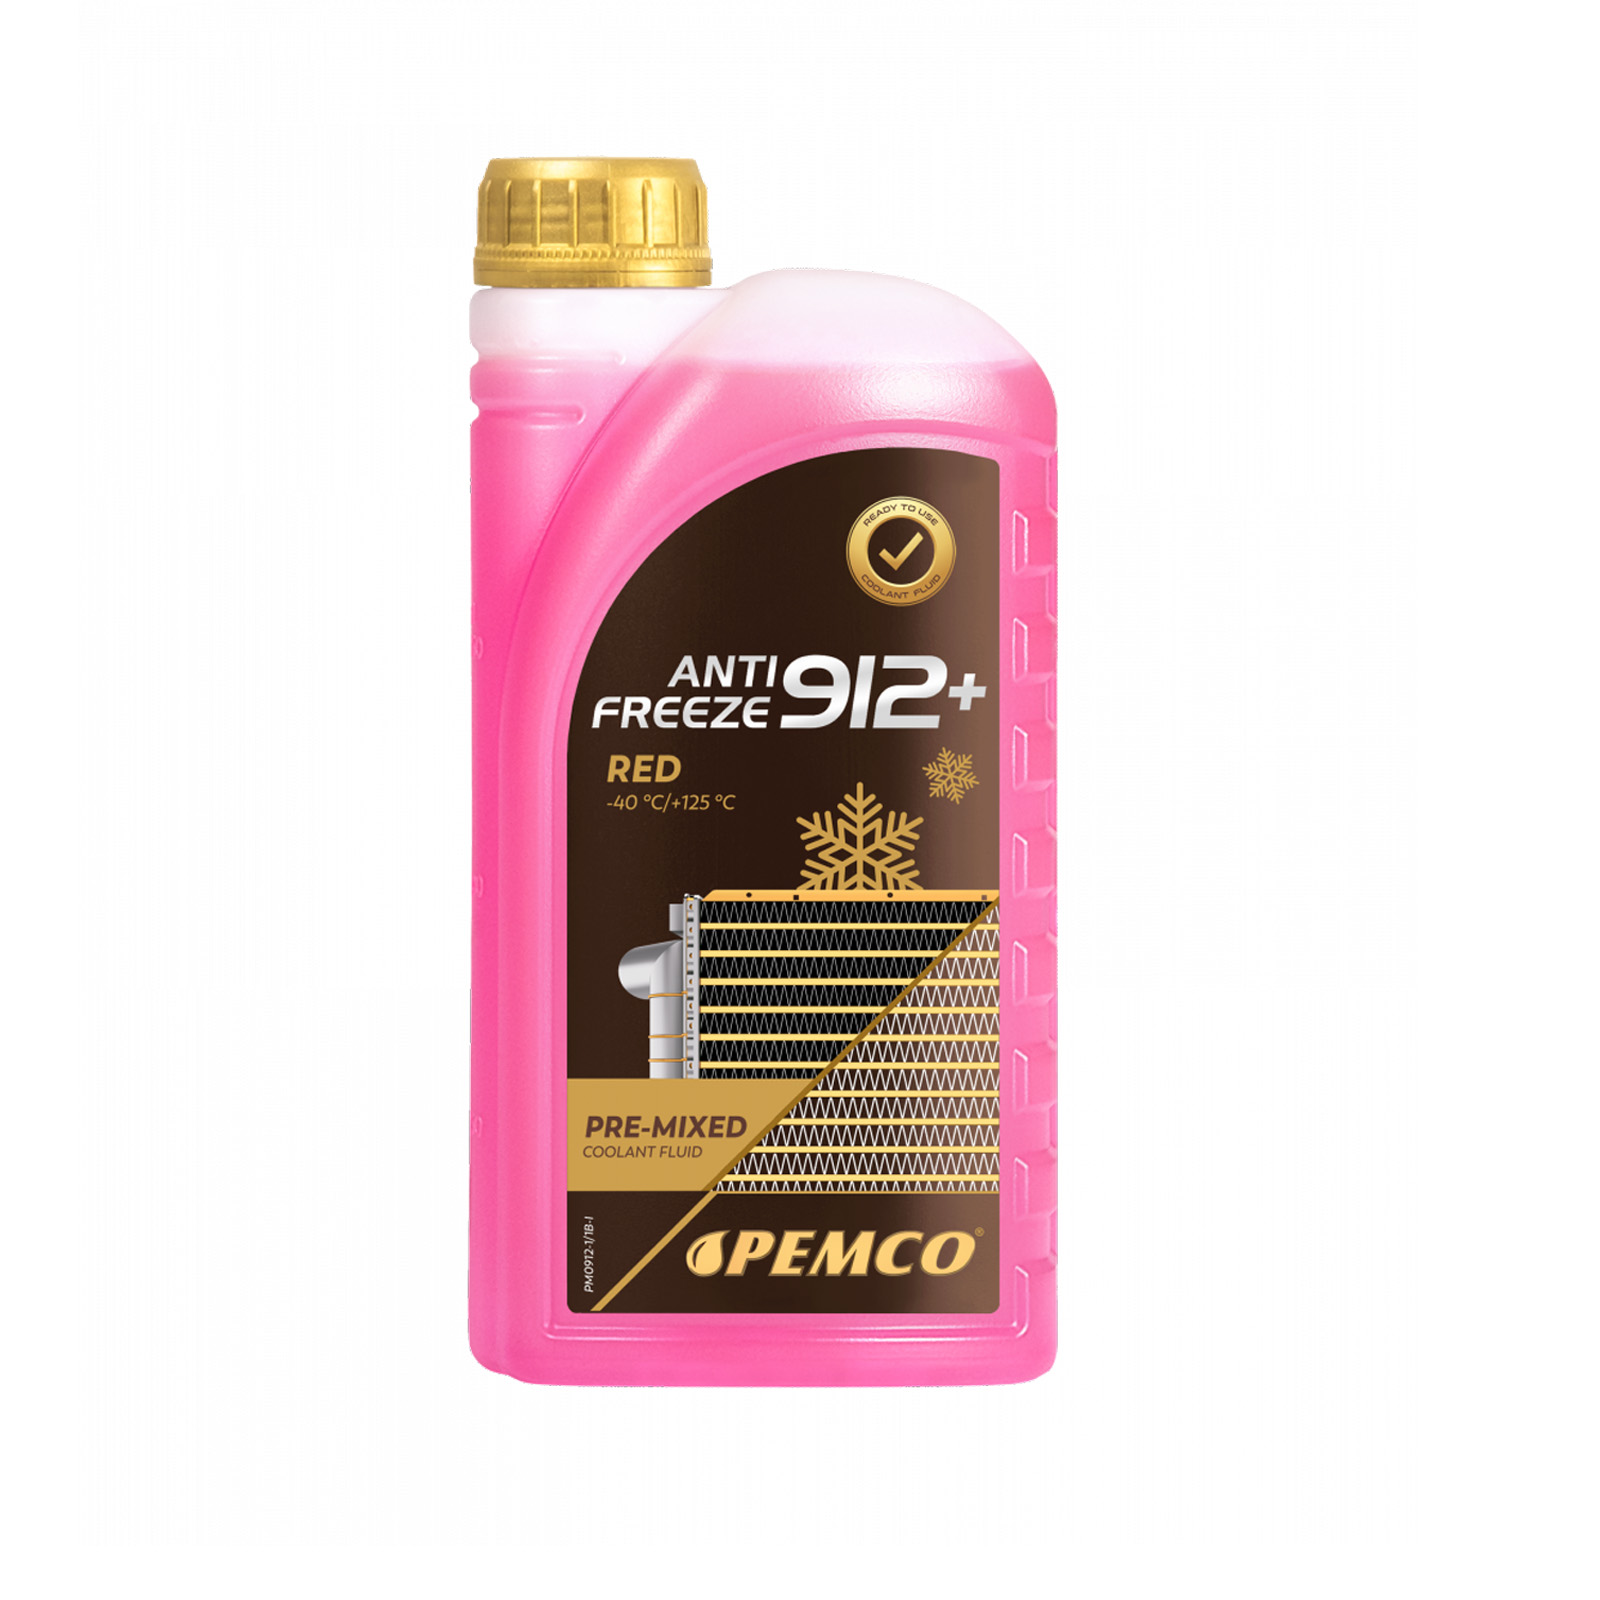 10 Liter PEMCO Antifreeze 912+ Kühler Frostschutz bis -40C rosa rot violett